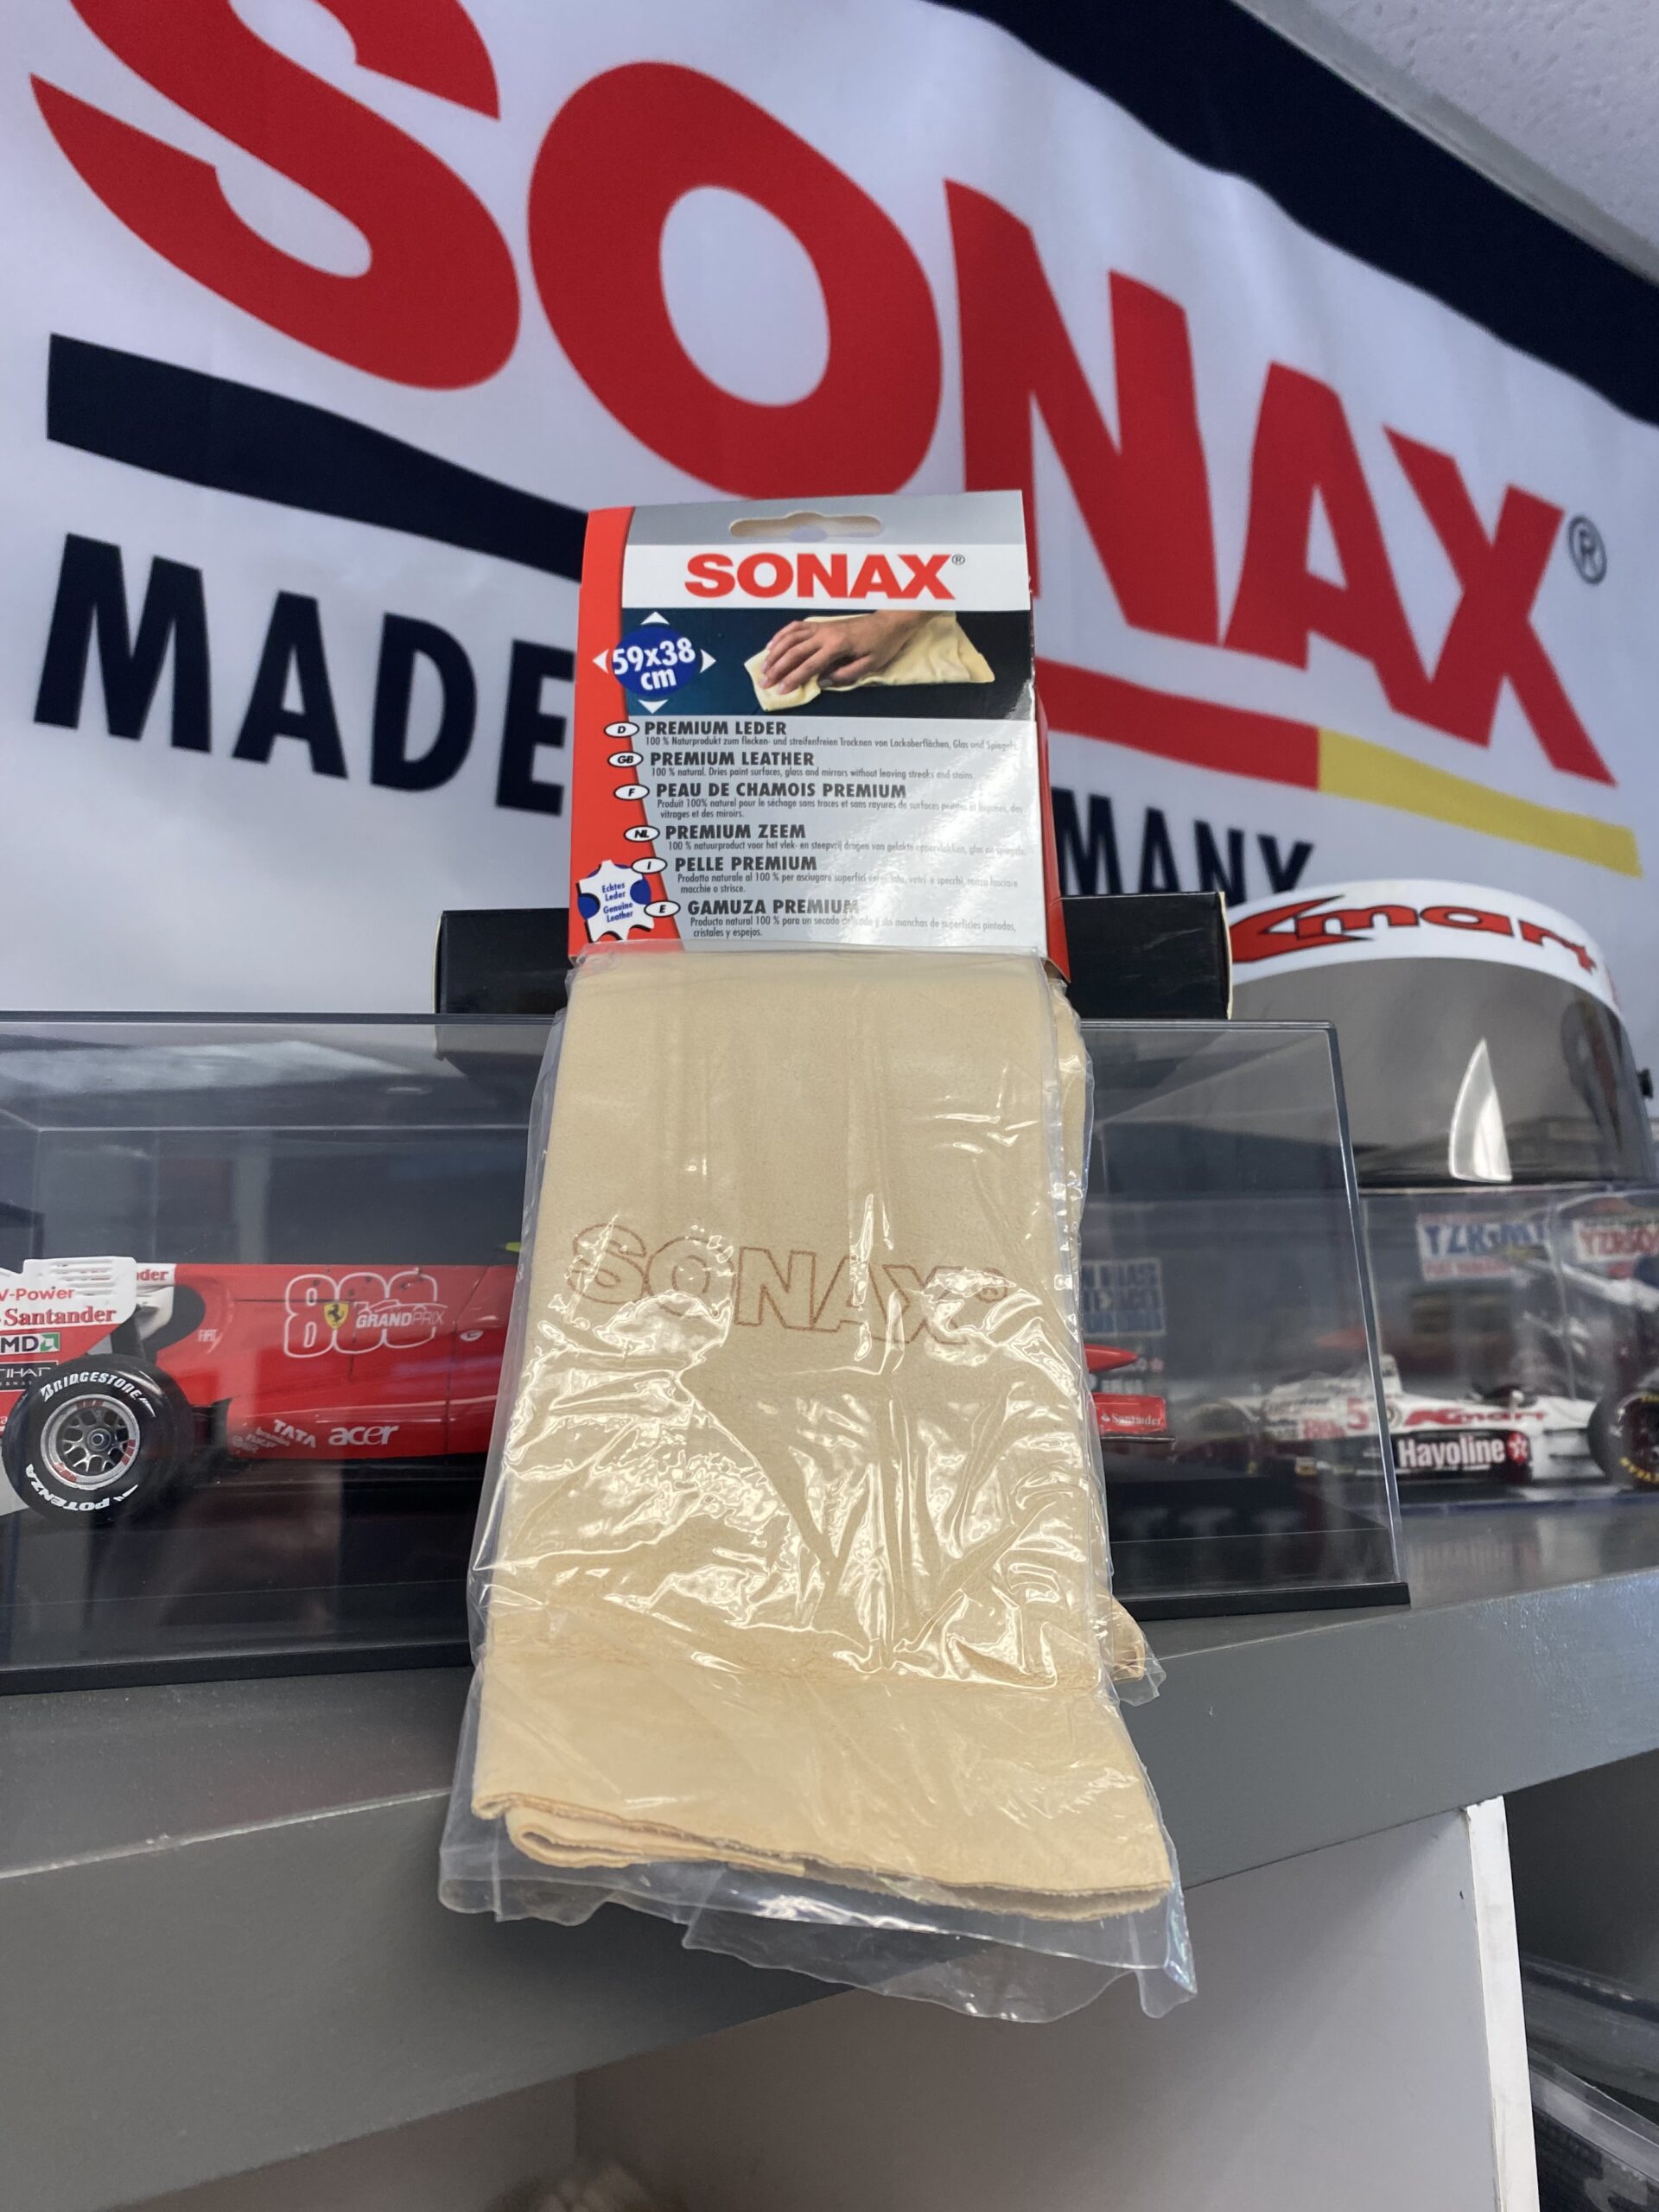 SONAX Ceramic Spray Coating 5 Liter